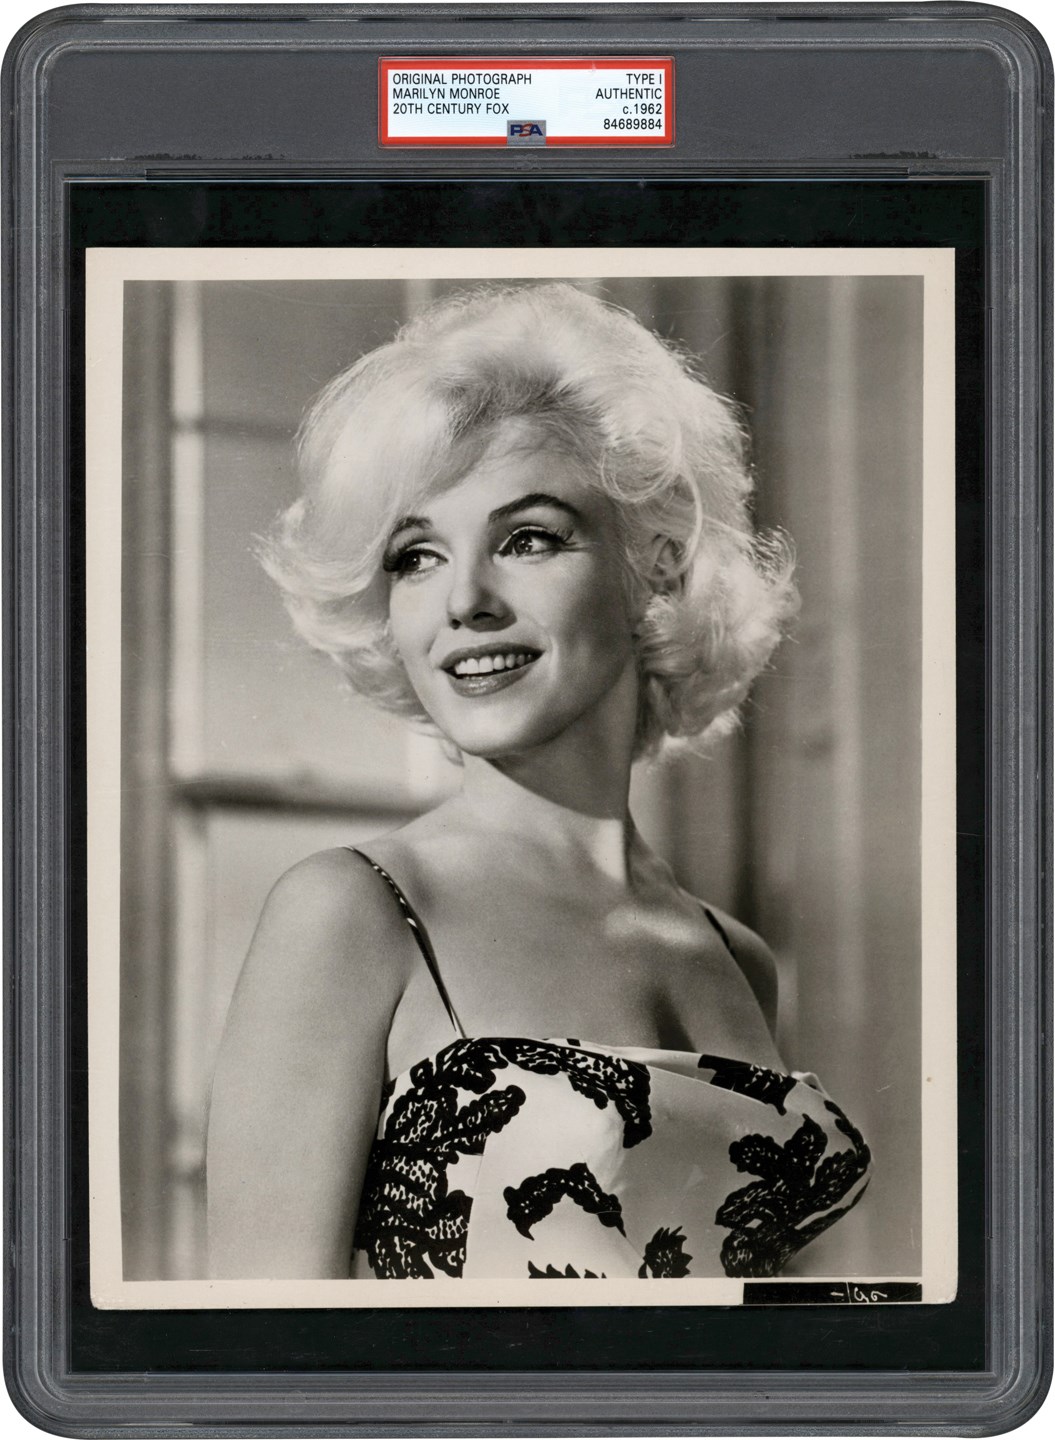 Rock And Pop Culture - Circa 1962 Marilyn Monroe 20th Century Fox Original Photograph (PSA Type I)